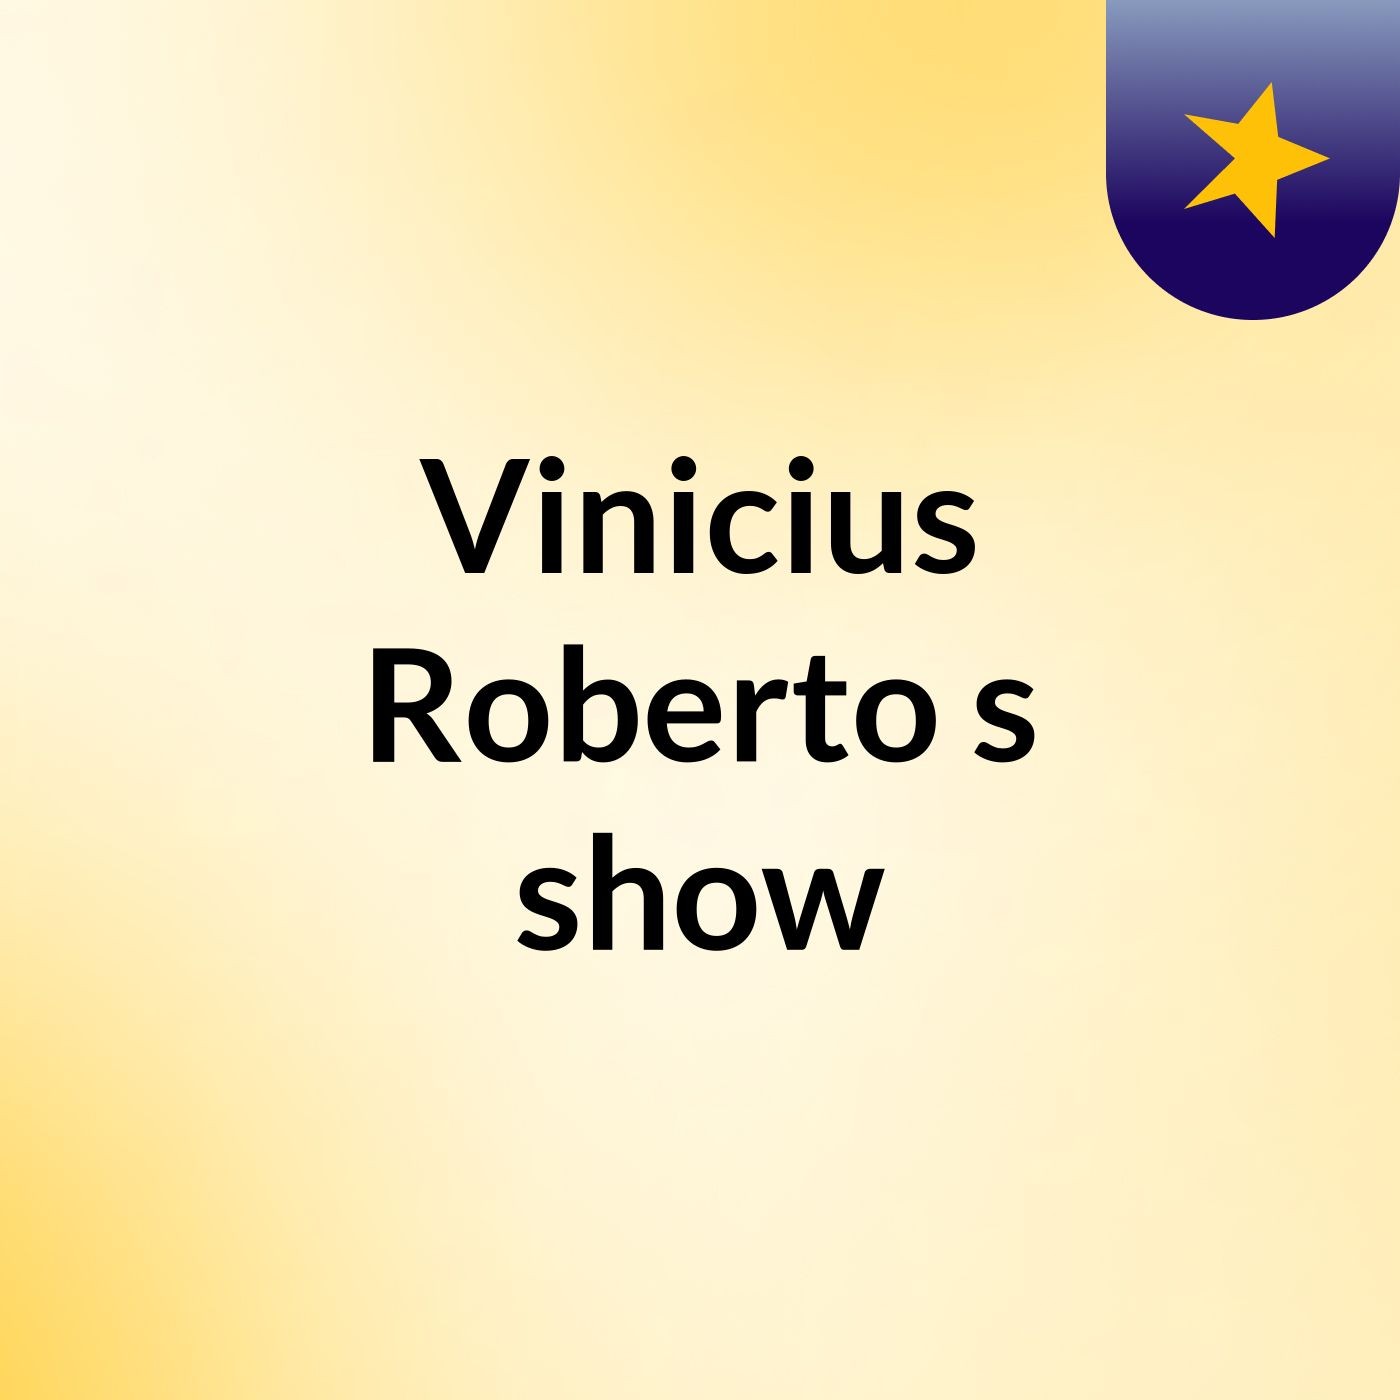 Vinicius Roberto's show